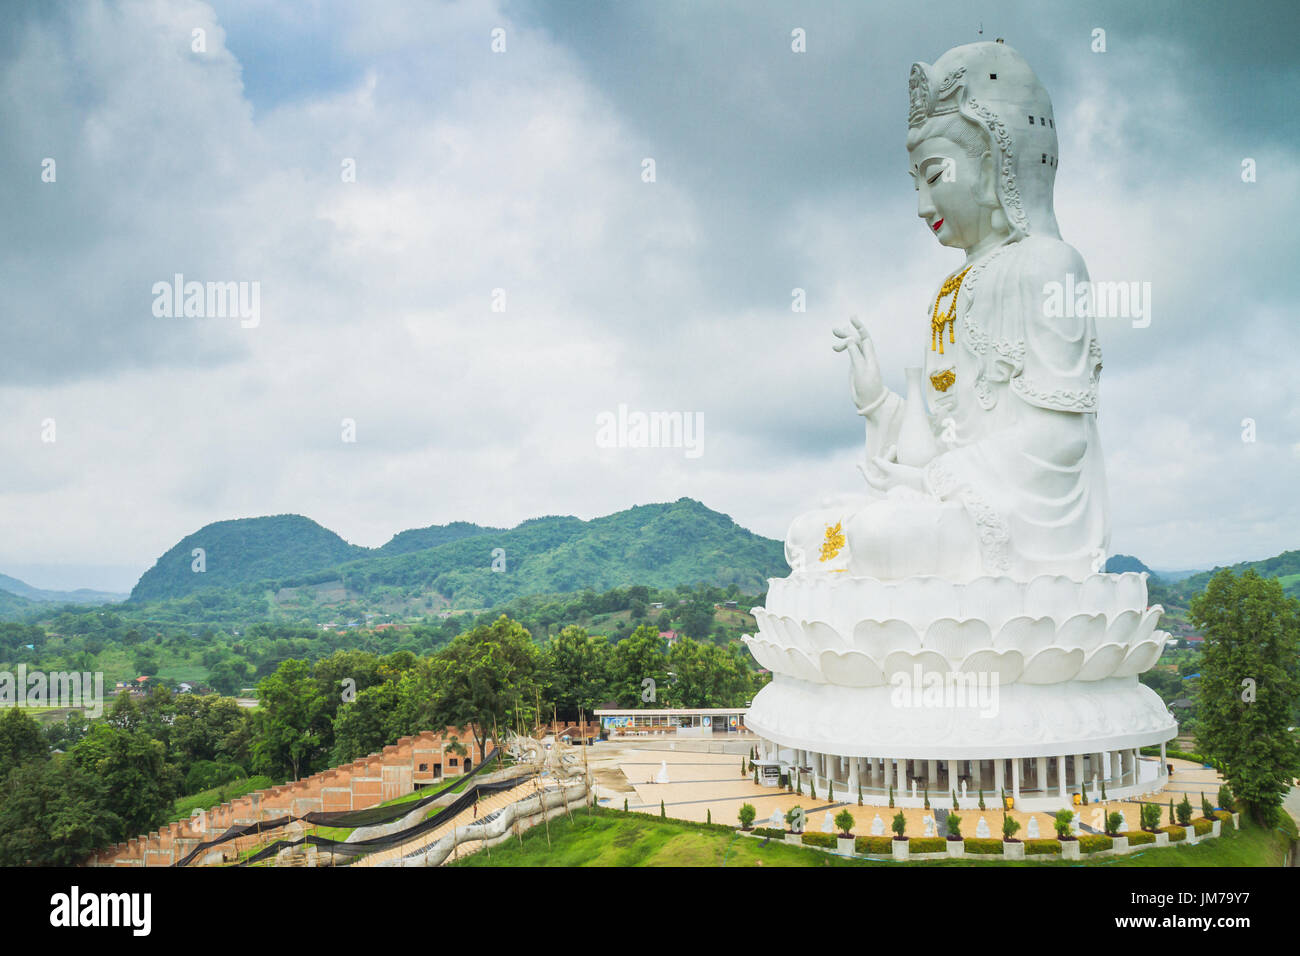 Chiang Rai, Thailand - July 12, 2017: White Guanyin Statue The Goddess Of Compassion (In Chinese Buddhism) Inside Wat Huai Pla Kang At Rain Clouds Bac Stock Photo